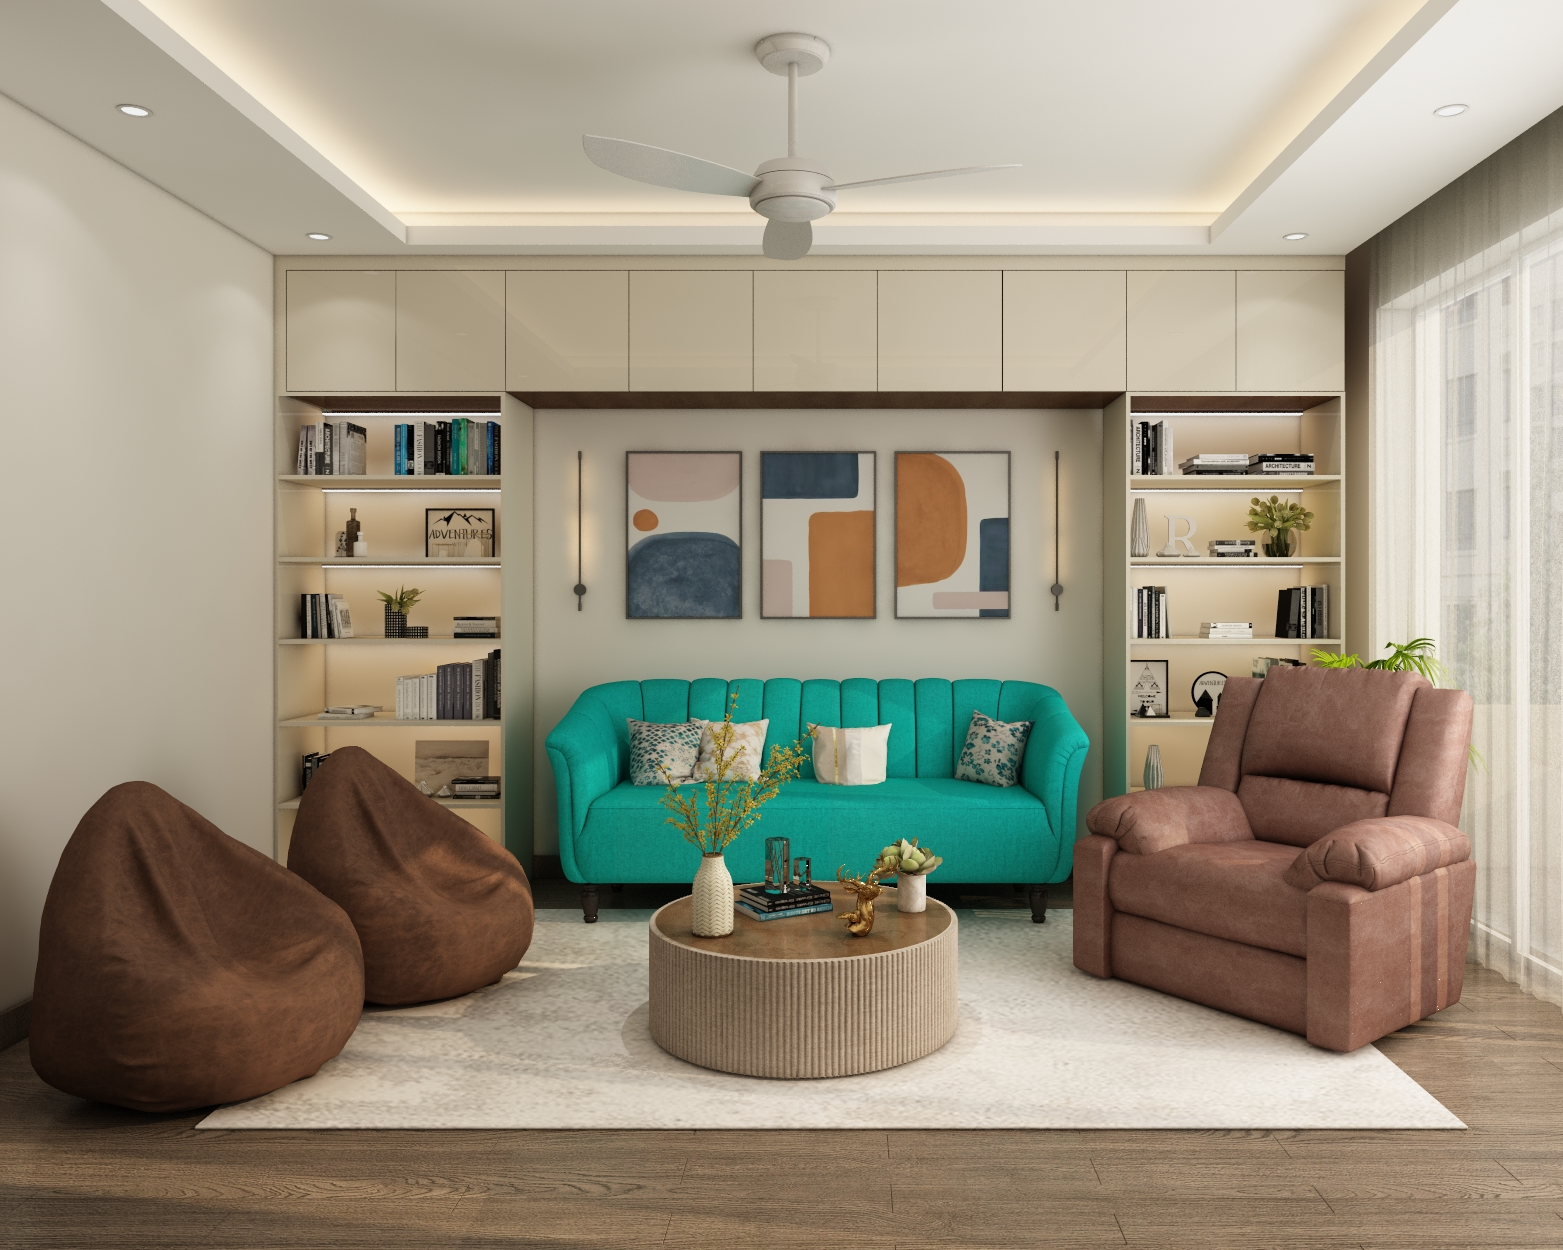 Contemporary Living Room Design With Loft Storage